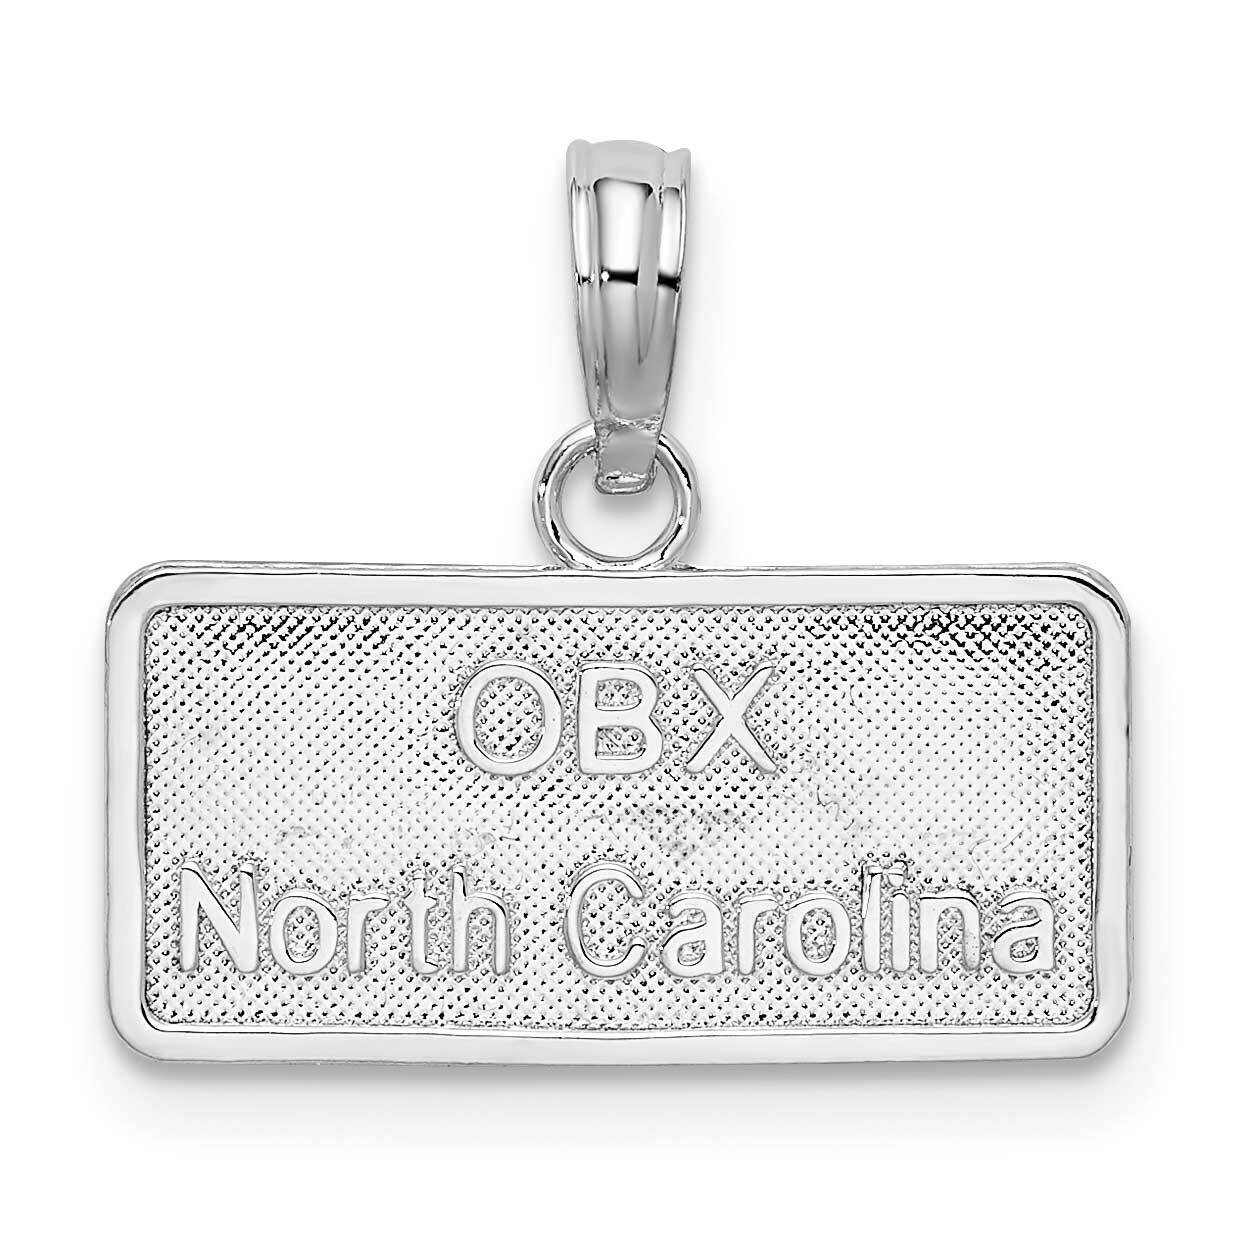 Obx North Carolina License Plate Pendant Sterling Silver QC10317